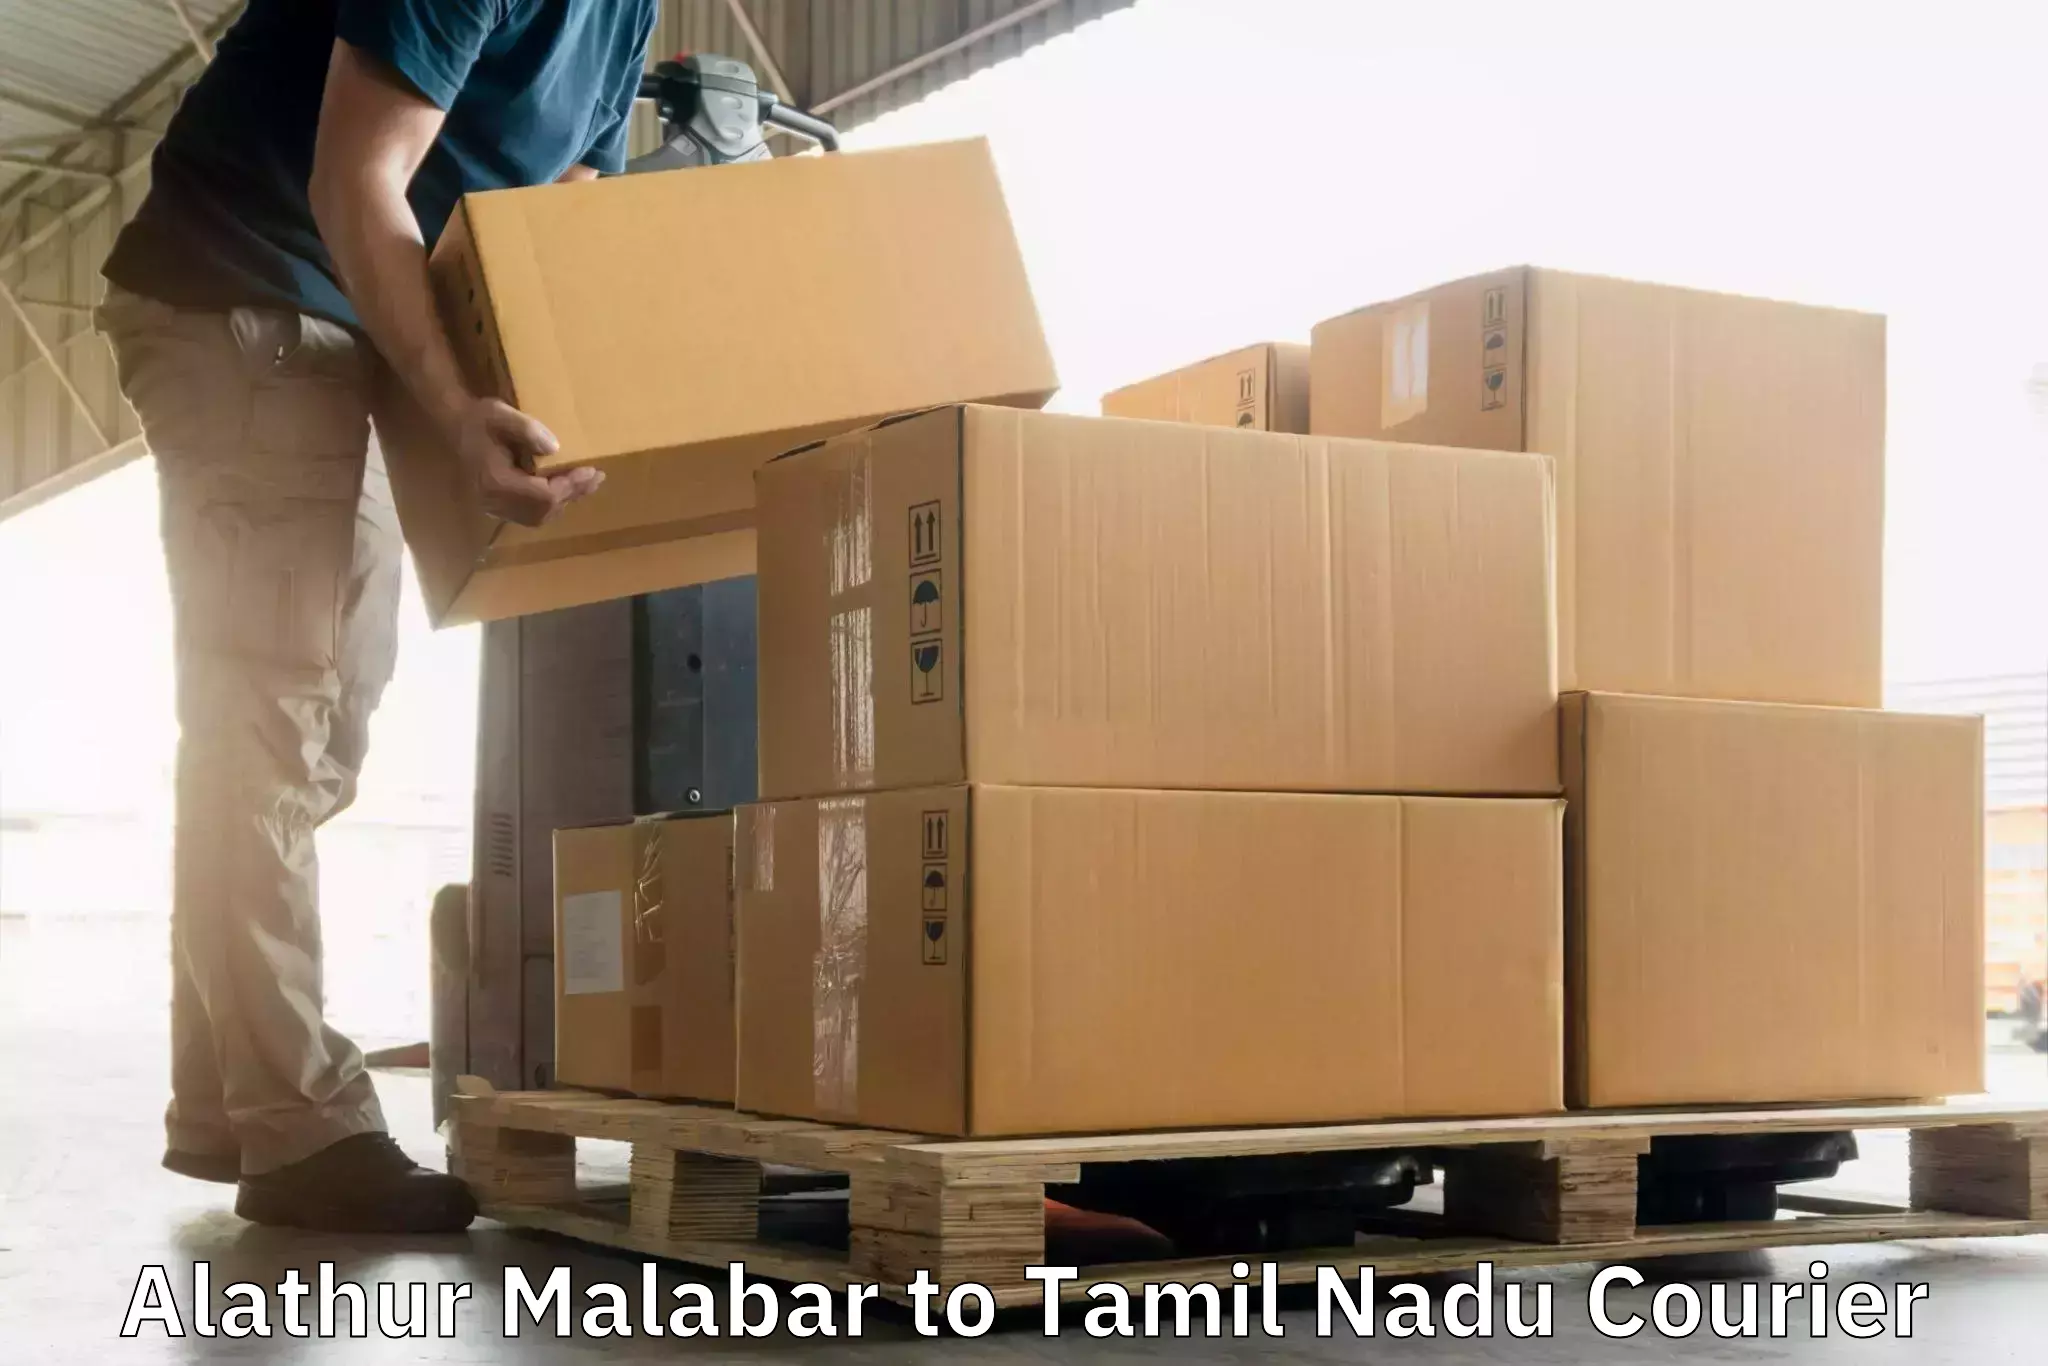 24/7 courier service in Alathur Malabar to Kalpakkam